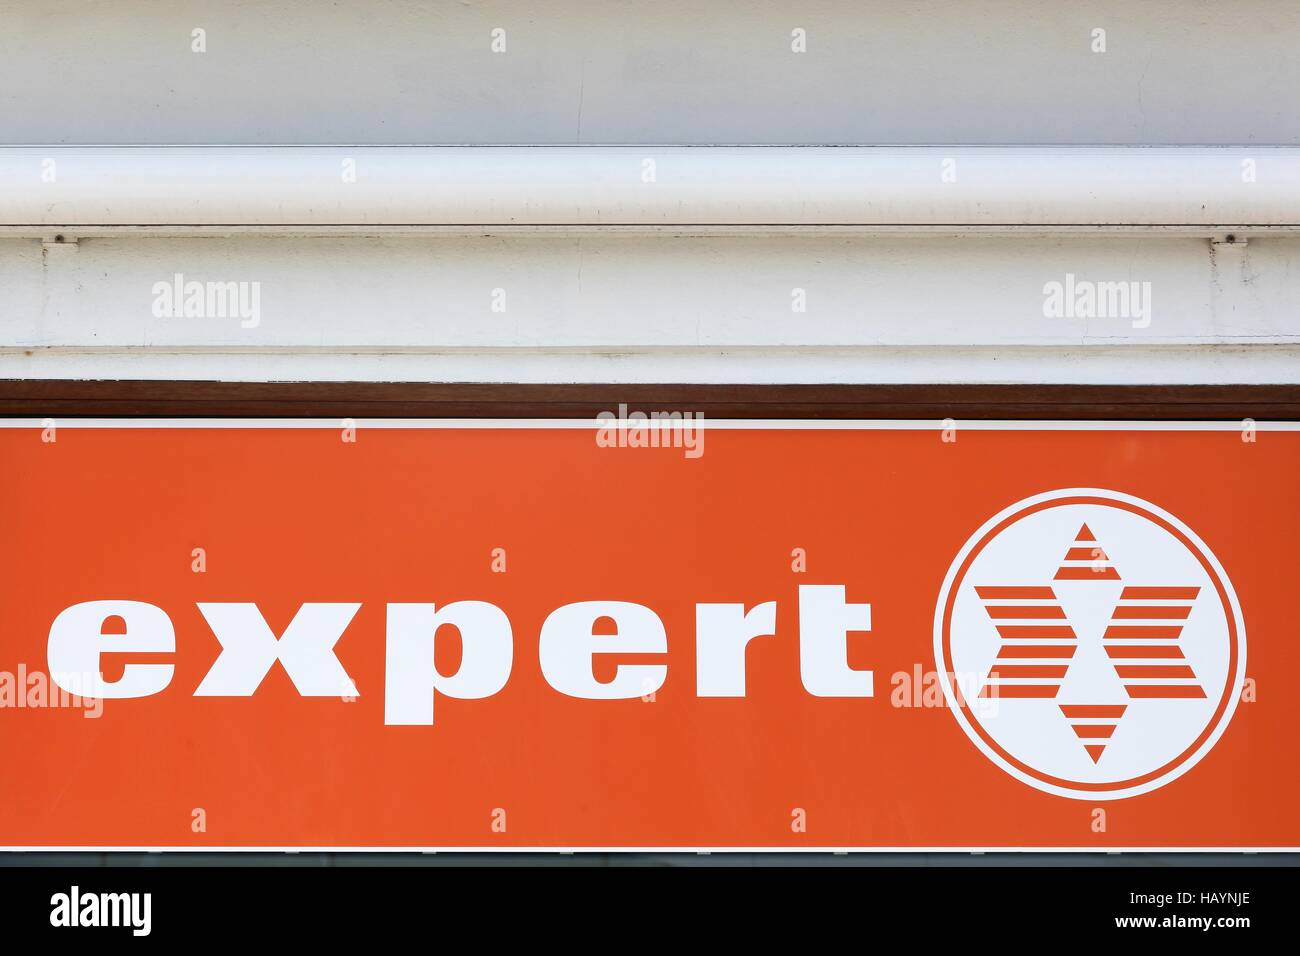 Expert logo on a wall Stock Photo